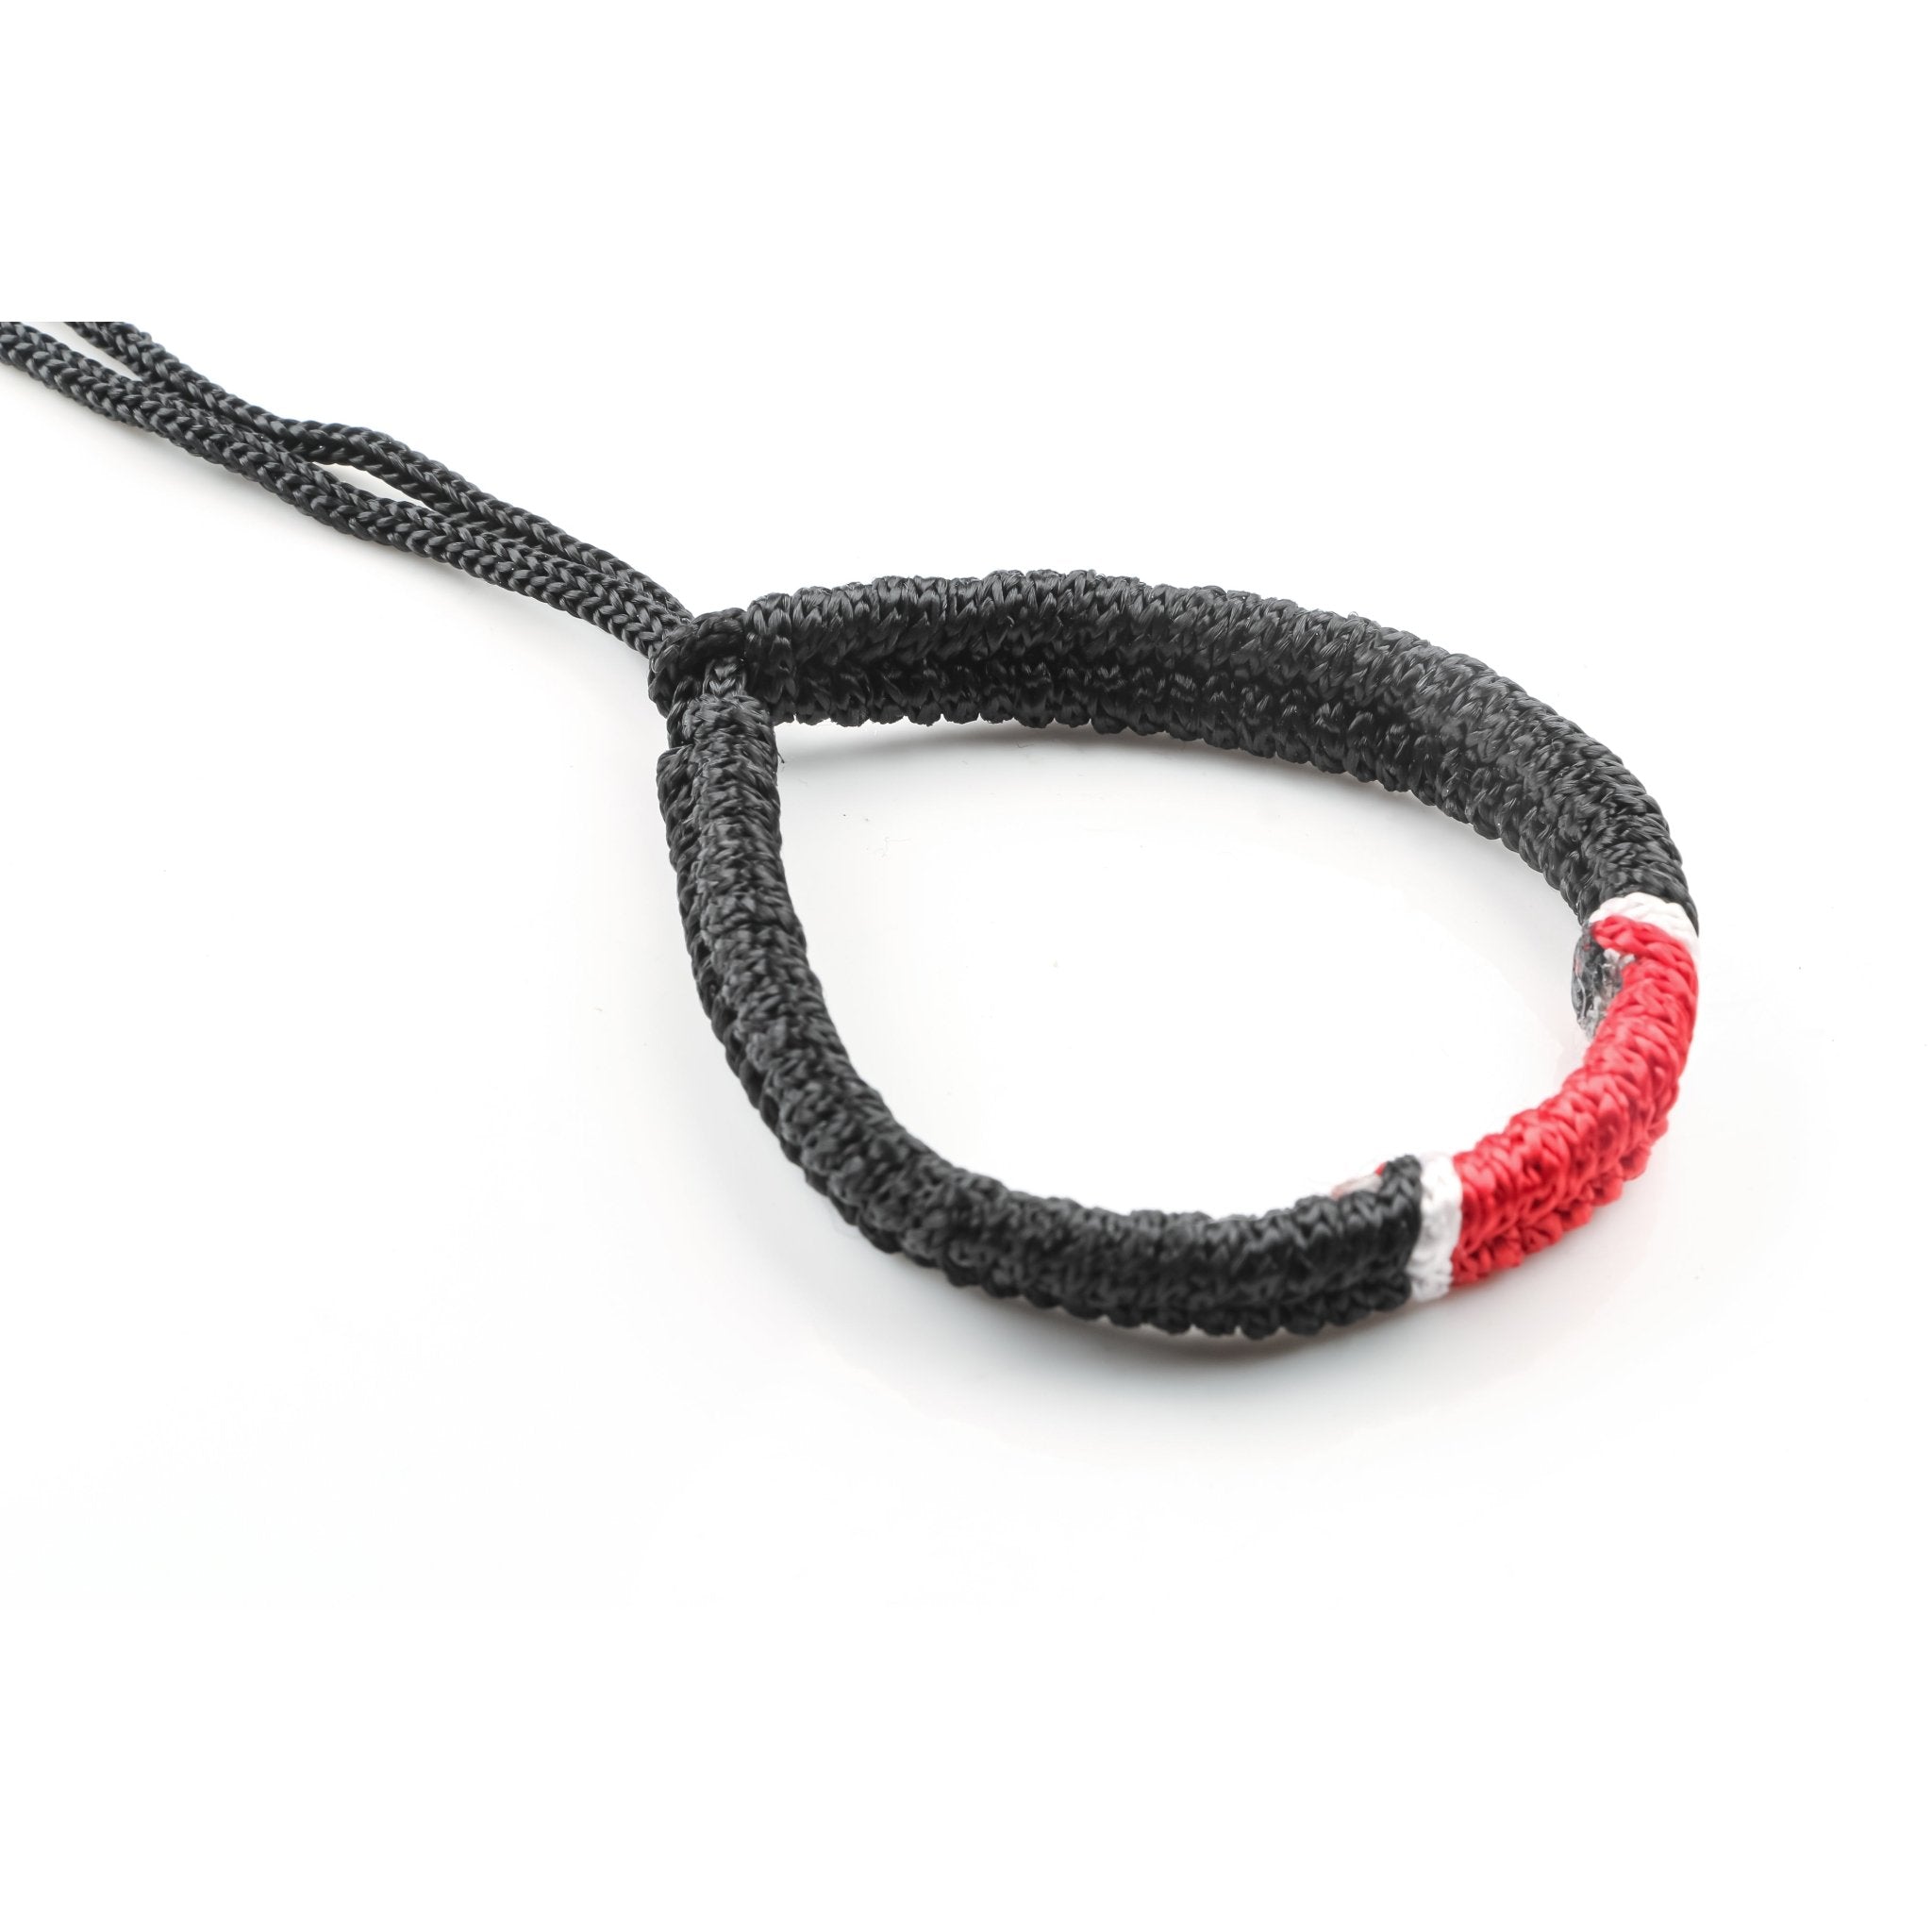 Brazilian Jiu-Jitsu Paracord Ranked Bracelet